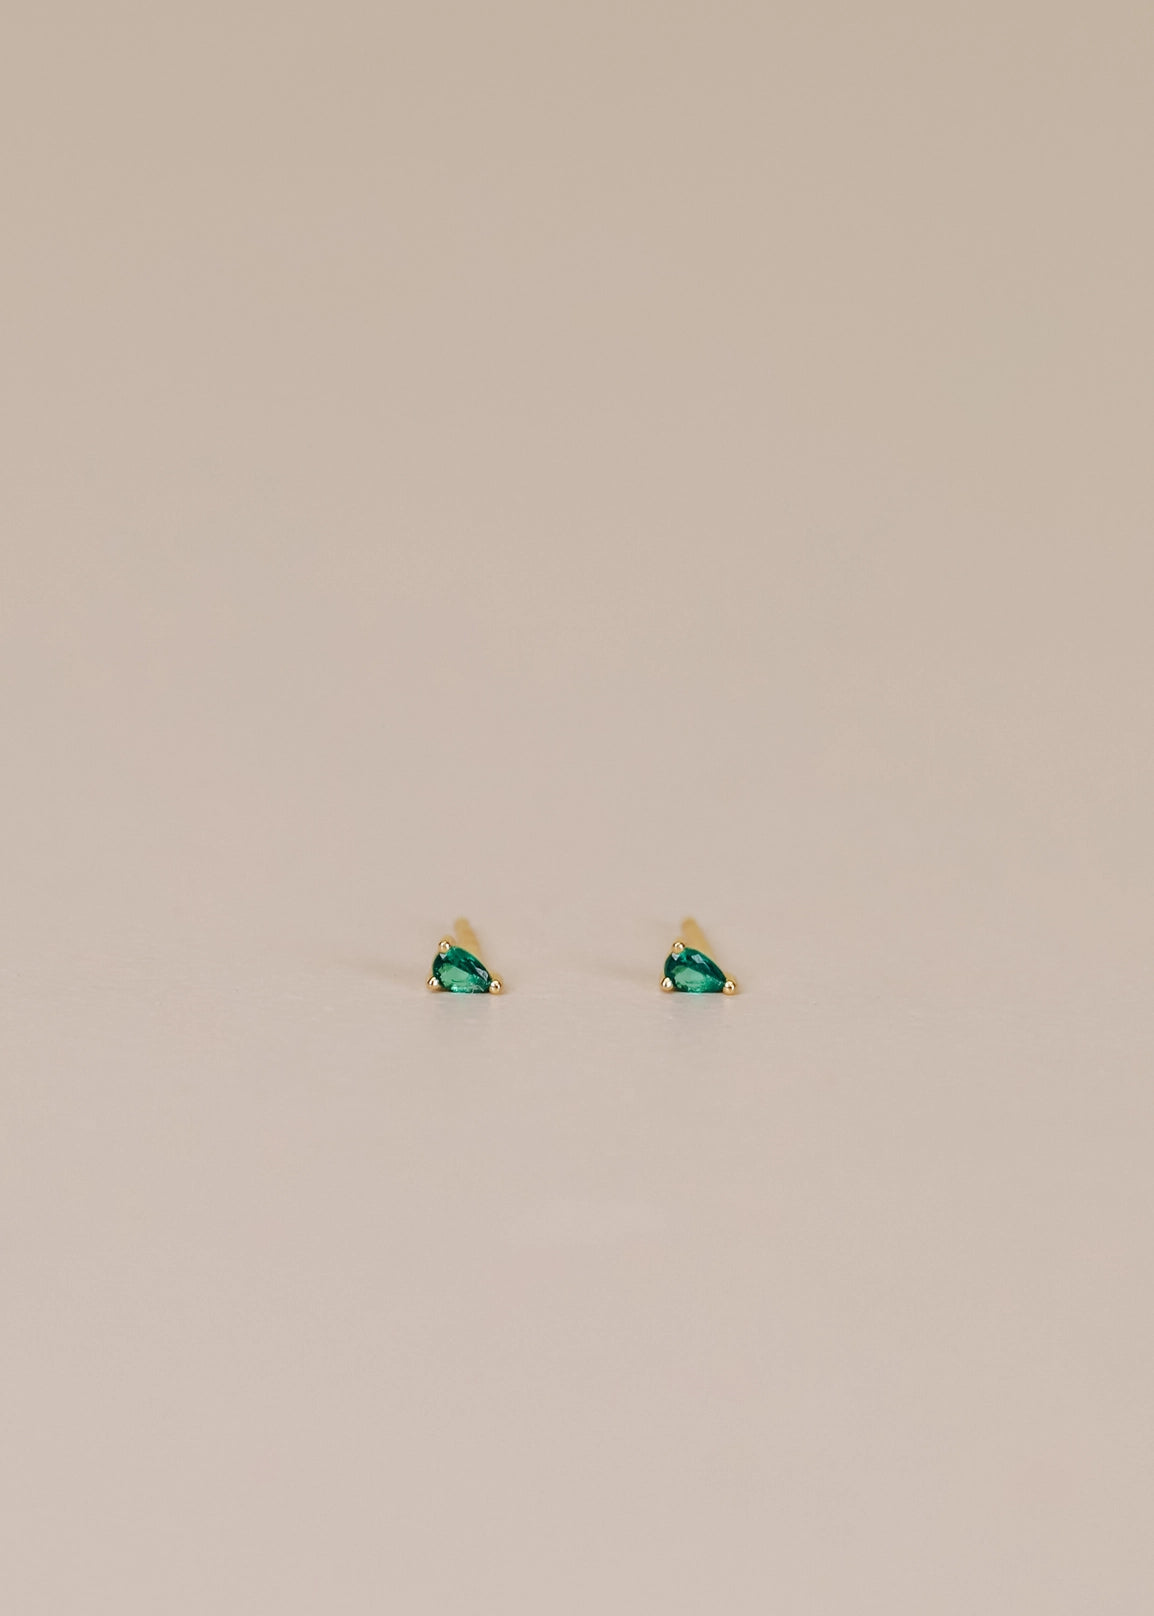 Teardrop - Emerald CZ - Earring Studs - Moon Room Shop and Wellness